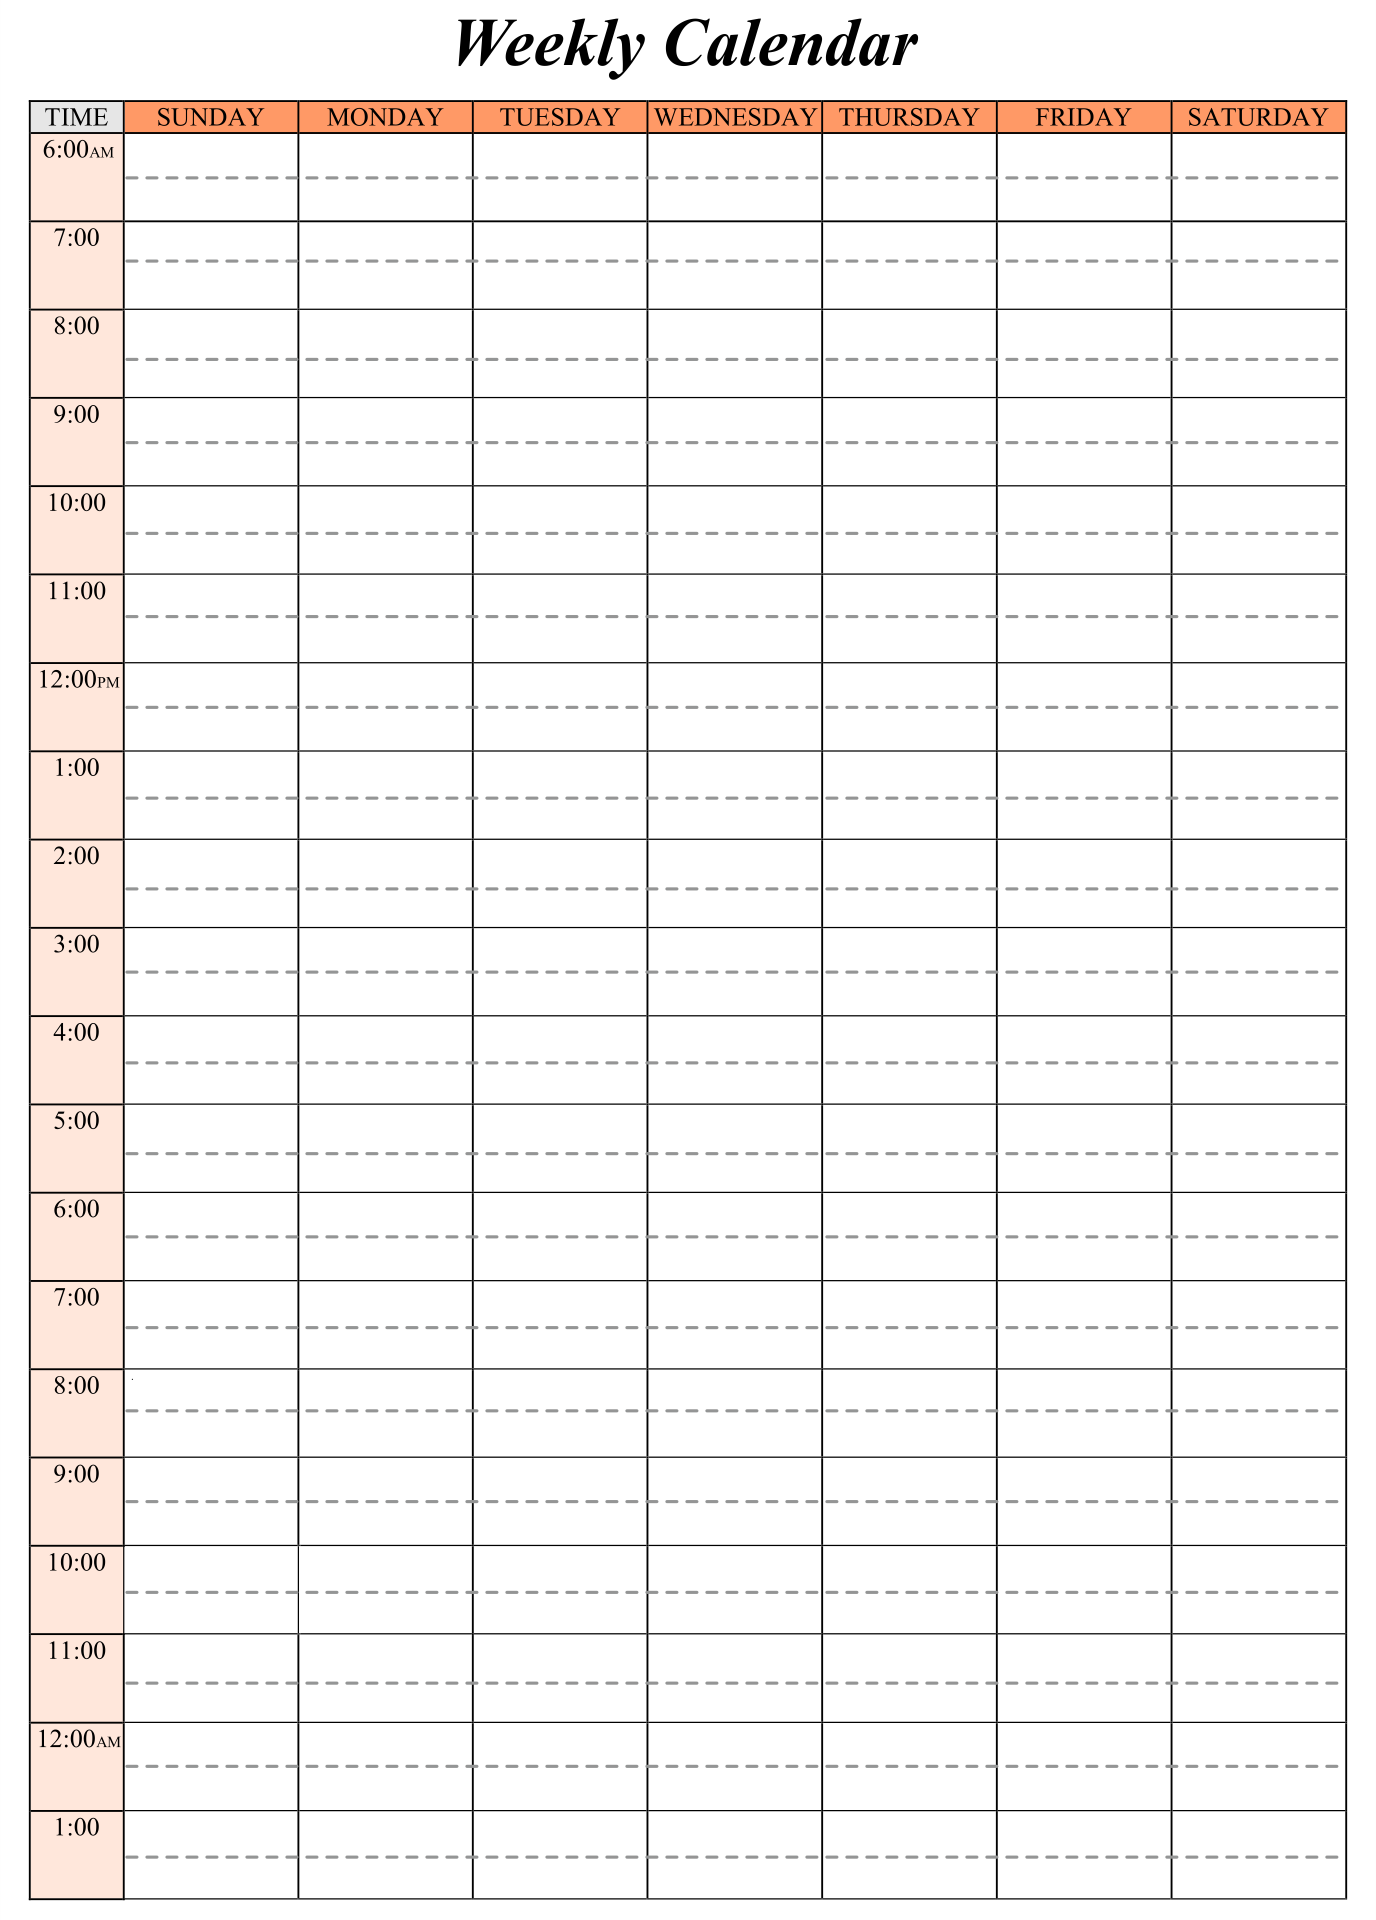 hourly-weekly-calendar-template